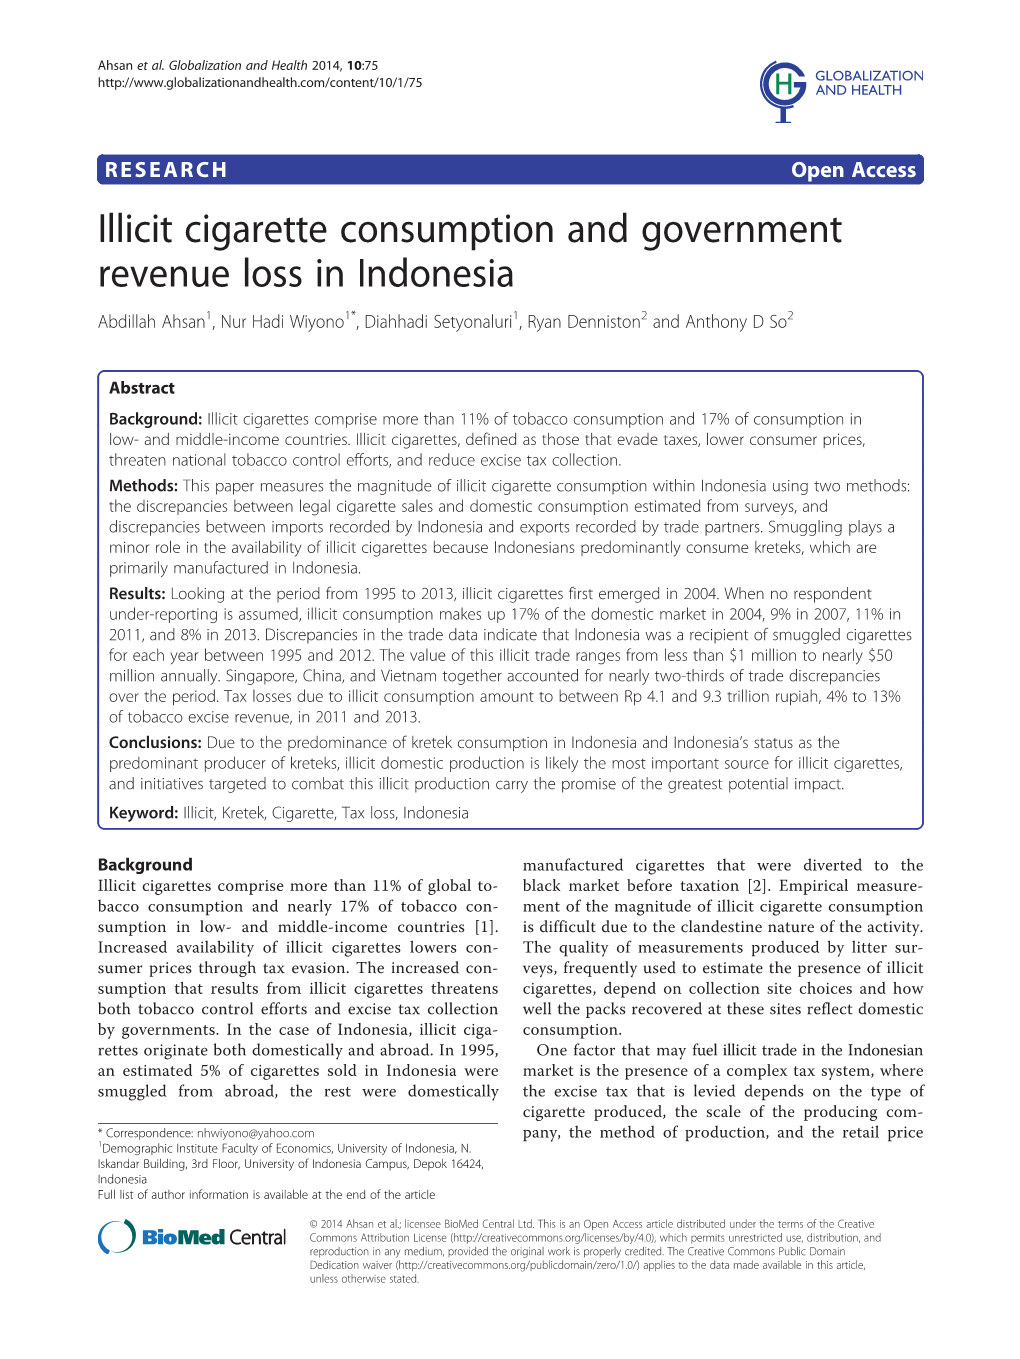 Illicit Cigarette Consumption and Government Revenue Loss in Indonesia Abdillah Ahsan1, Nur Hadi Wiyono1*, Diahhadi Setyonaluri1, Ryan Denniston2 and Anthony D So2